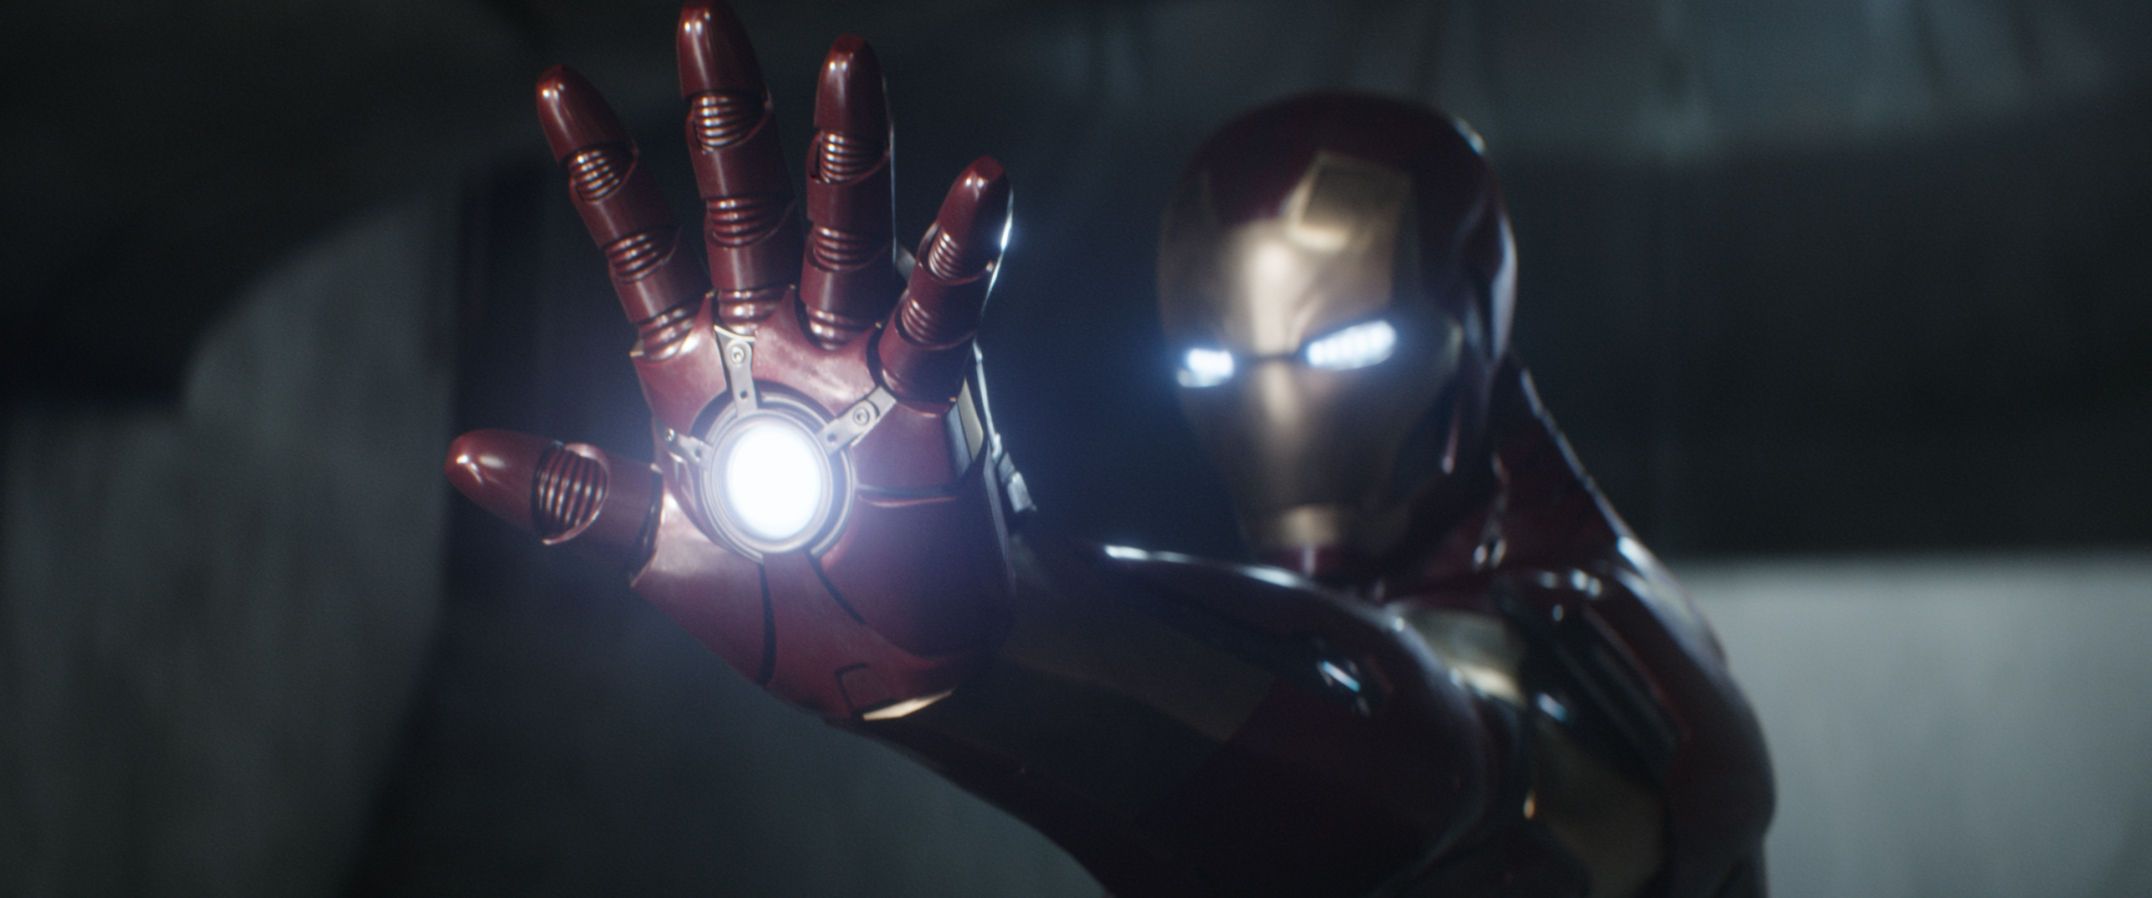 Captain America: Civil War Trailer 2 - Iron Man Repulsor